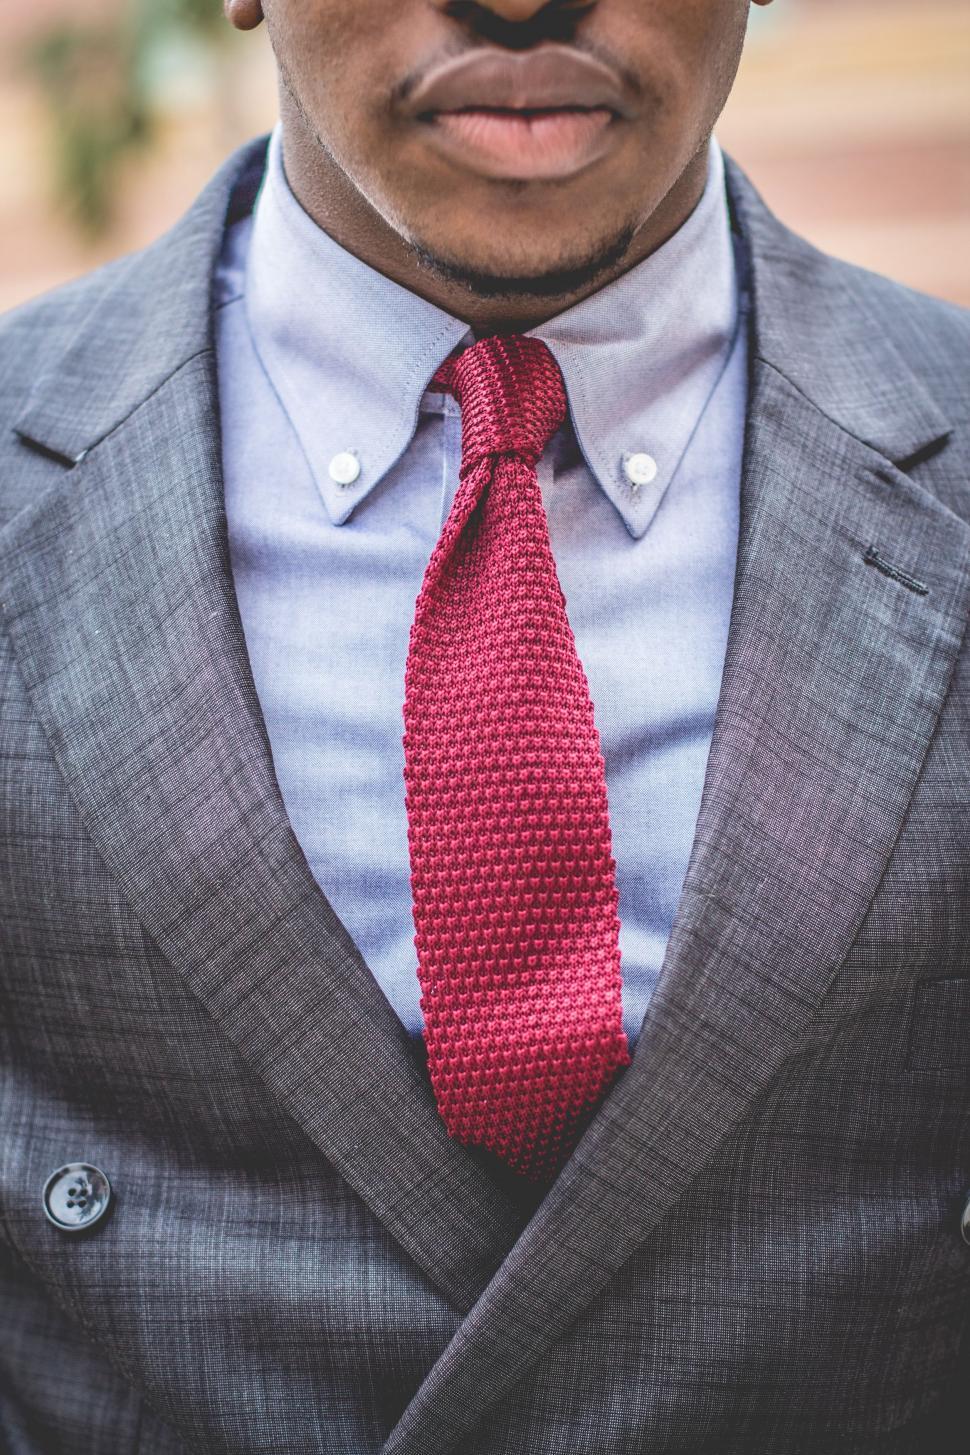 Free Image of necktie windsor tie neckwear garment clothing businessman business man jacket male 